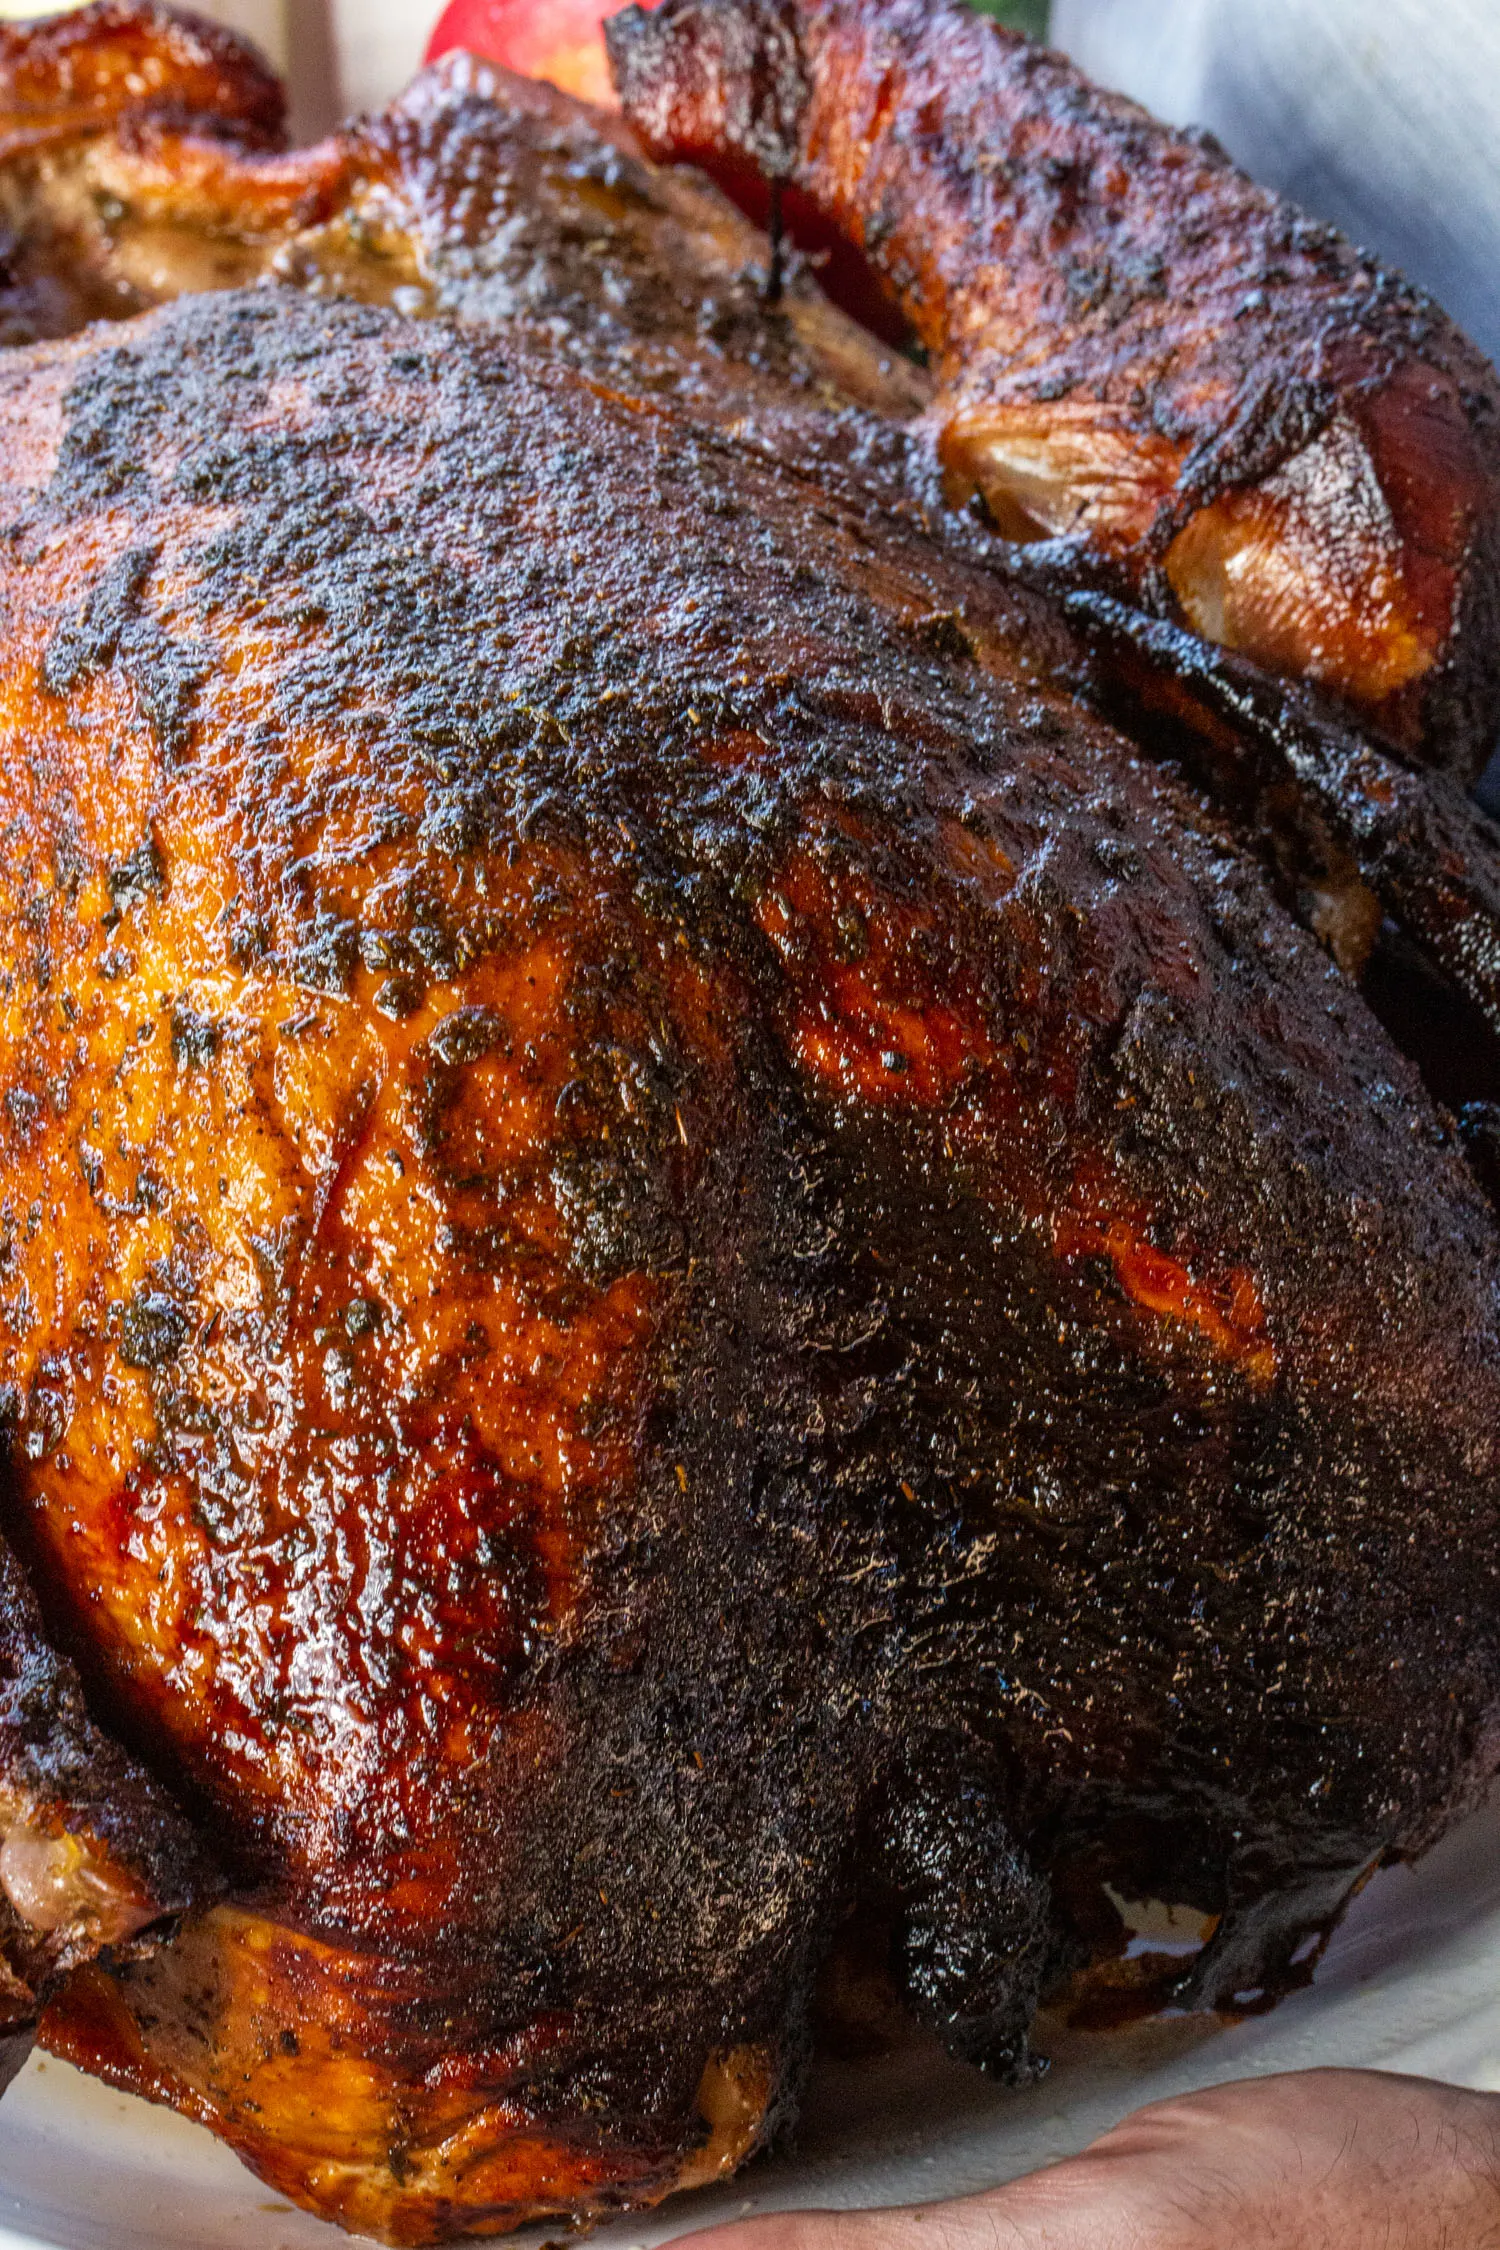 close up of smoked turkey breast